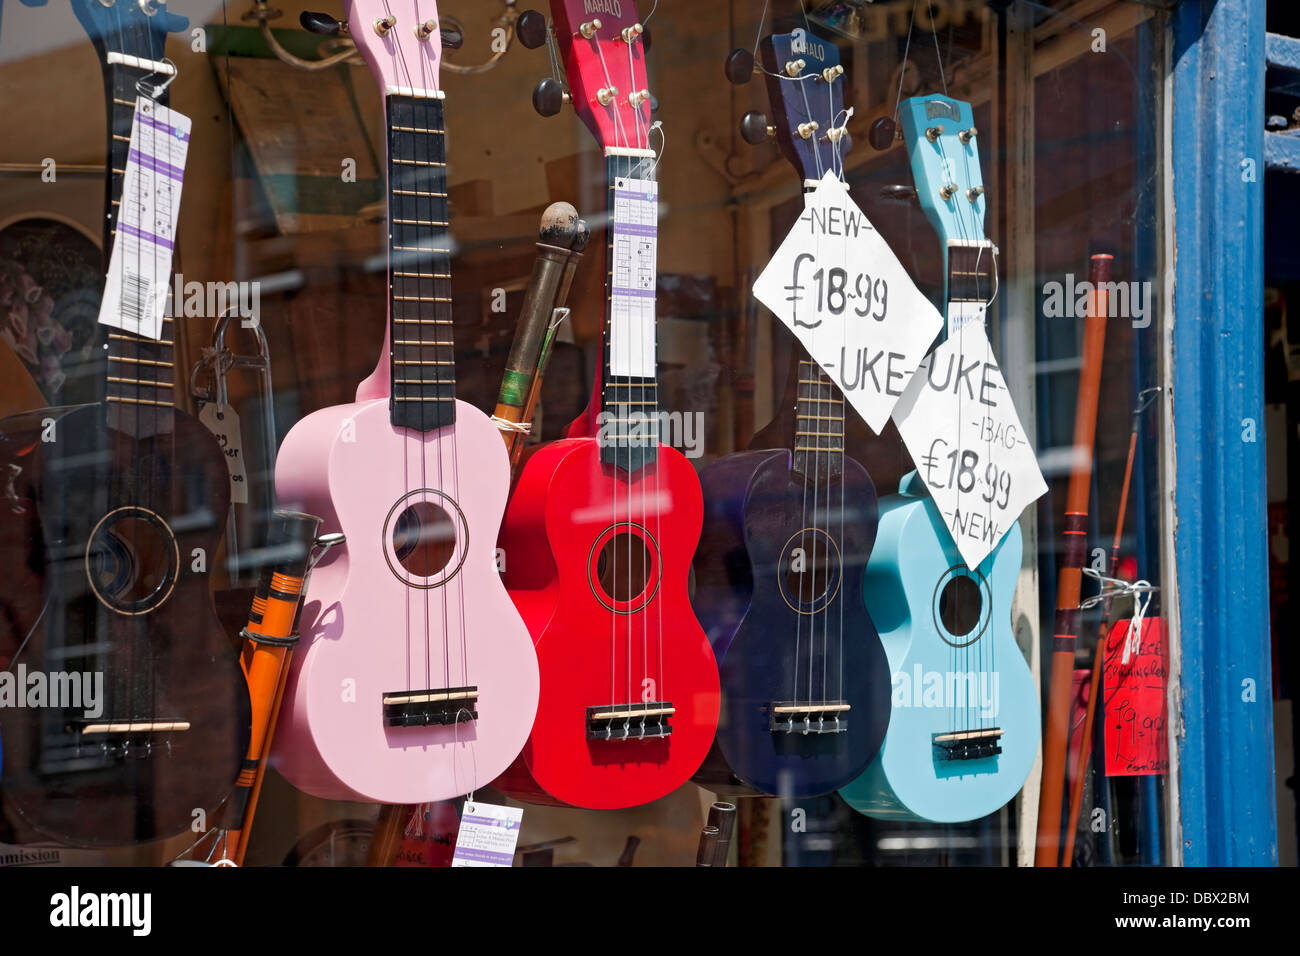 Musical instruments and ukuleles ukulele guitars for sale in shop store window York North Yorkshire England UK United Kingdom GB Great Britain Stock Photo